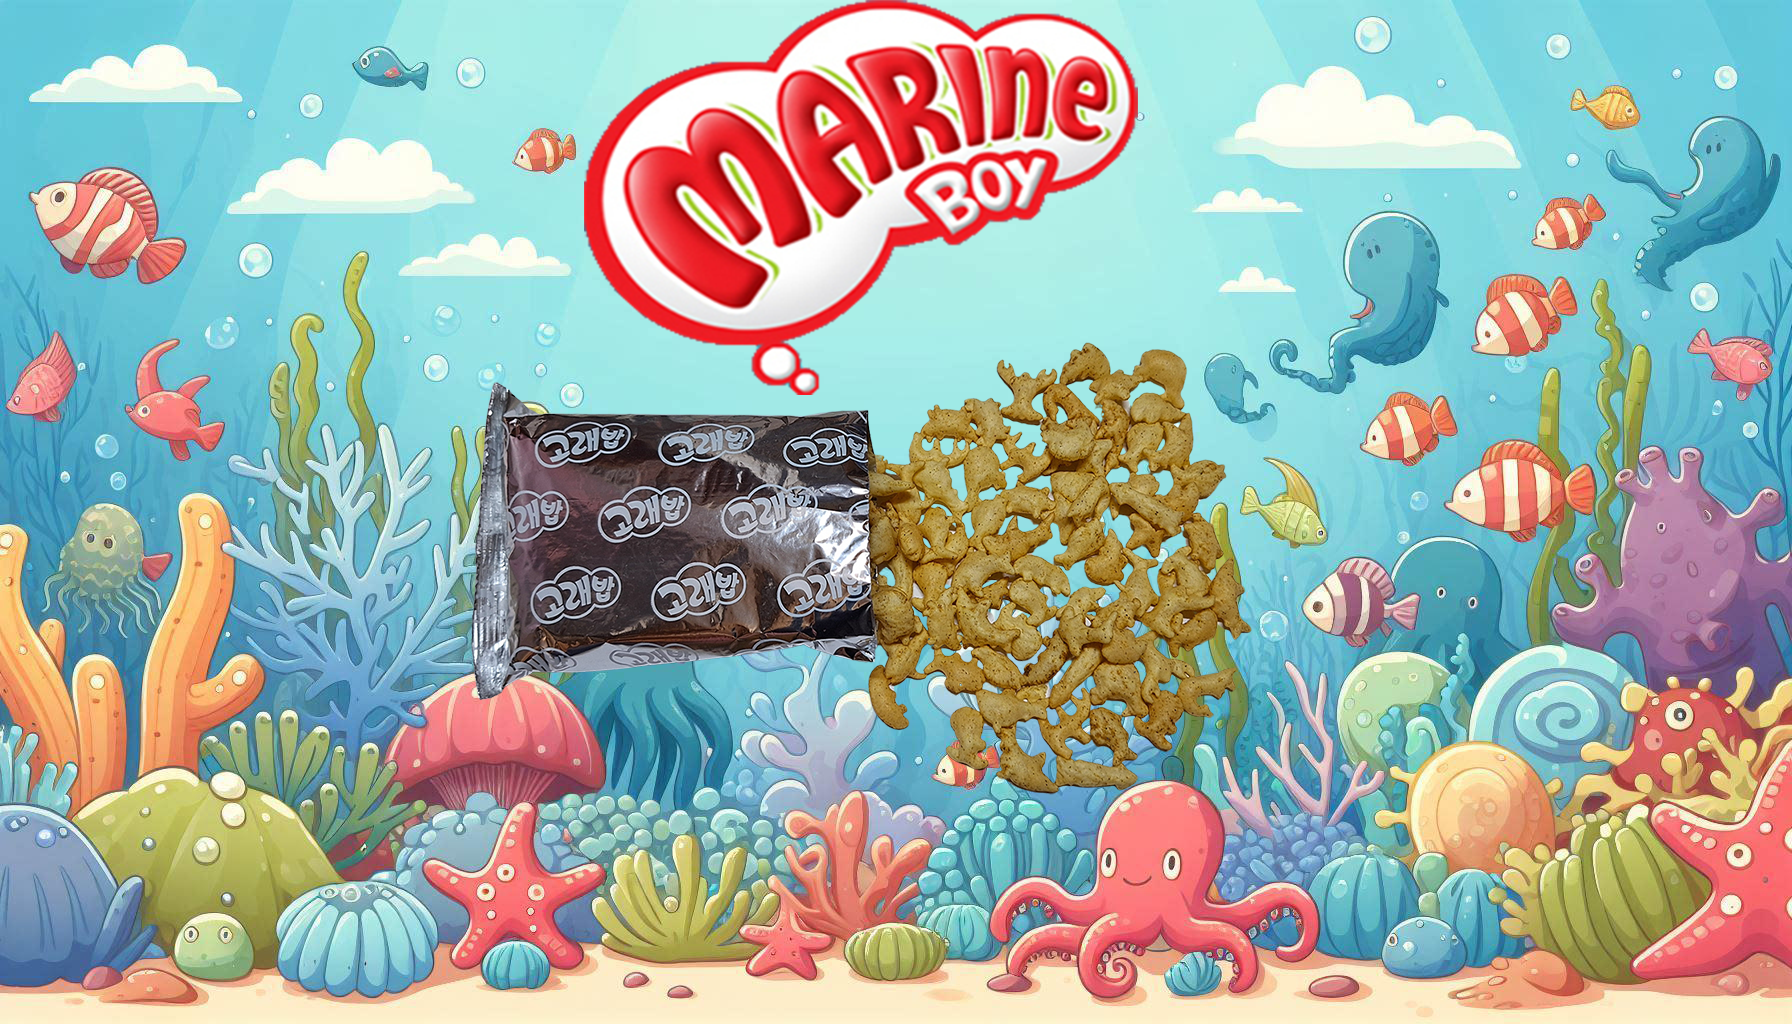 Orion Baked Marine Boy Sea Creatures Shaped Sharing Box 고래밥, 상어밥  40g Bag